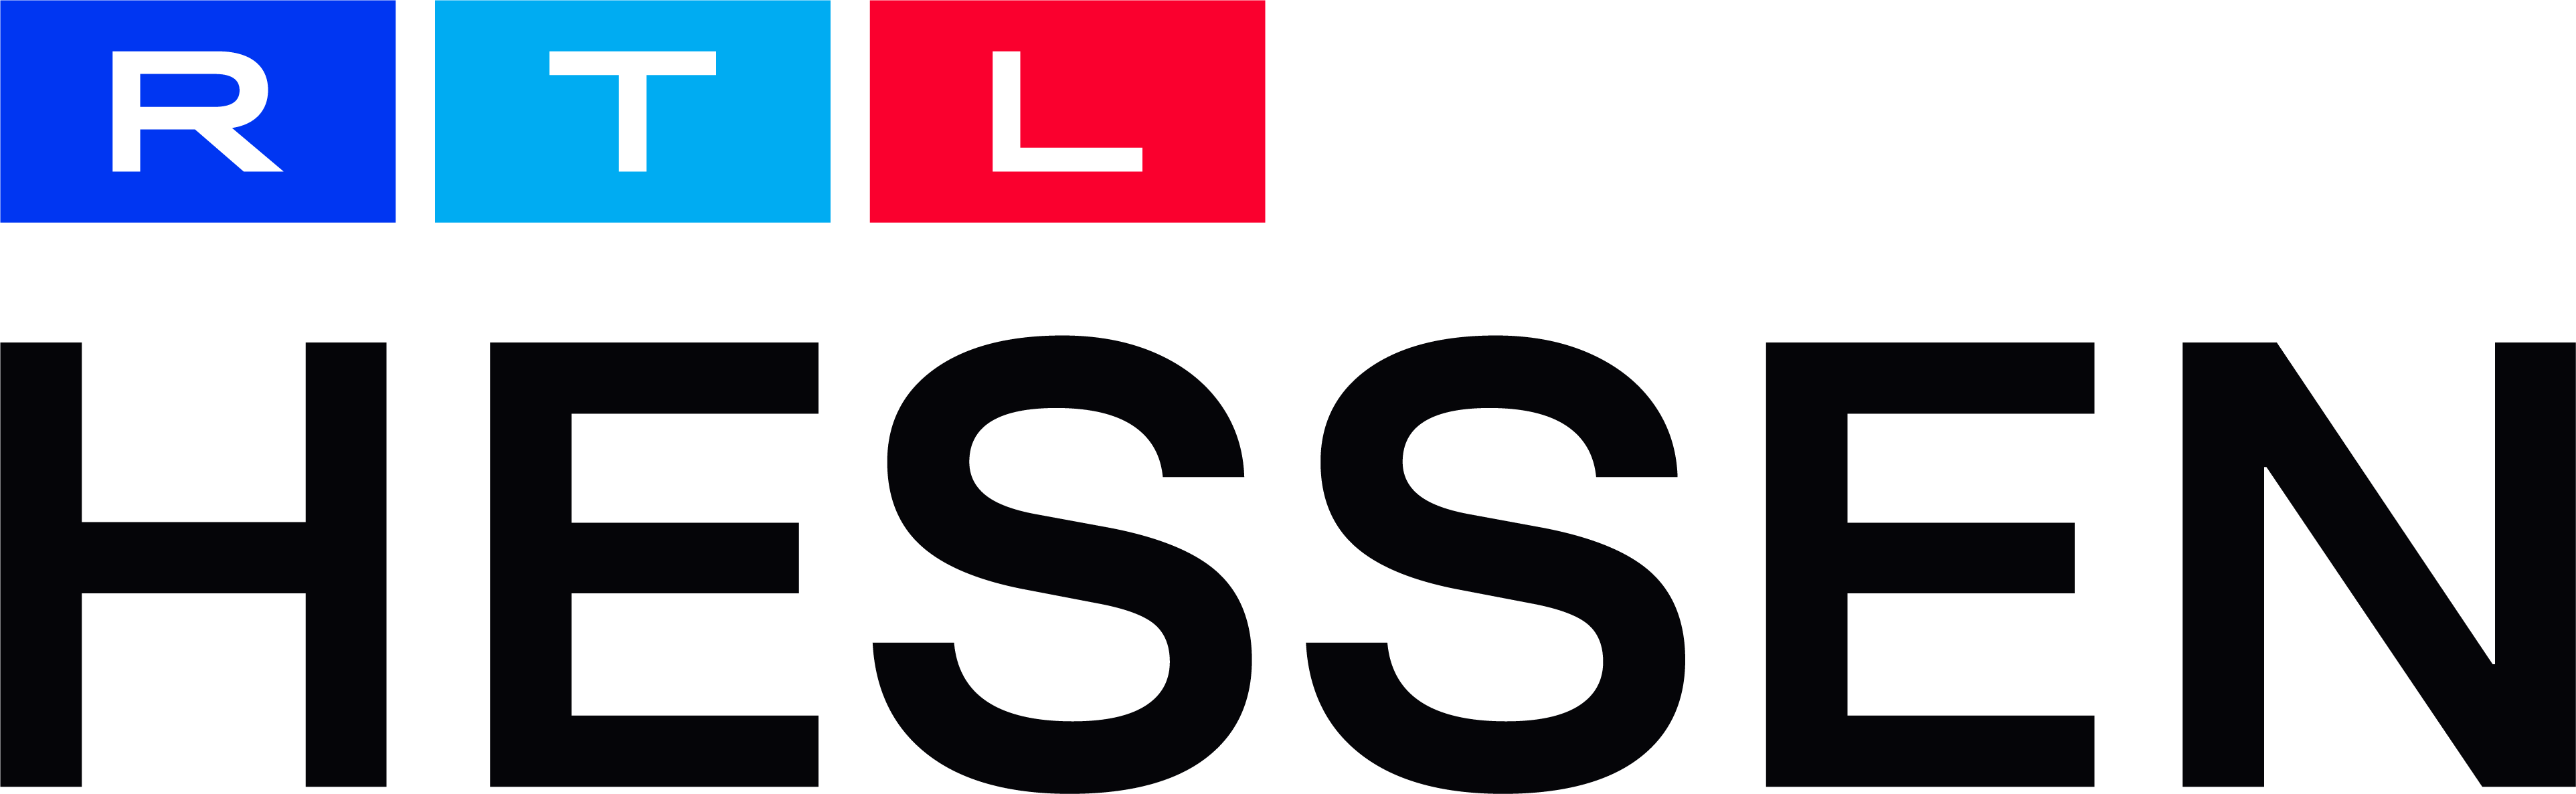  RTL_HESSEN_Logo_2021.png